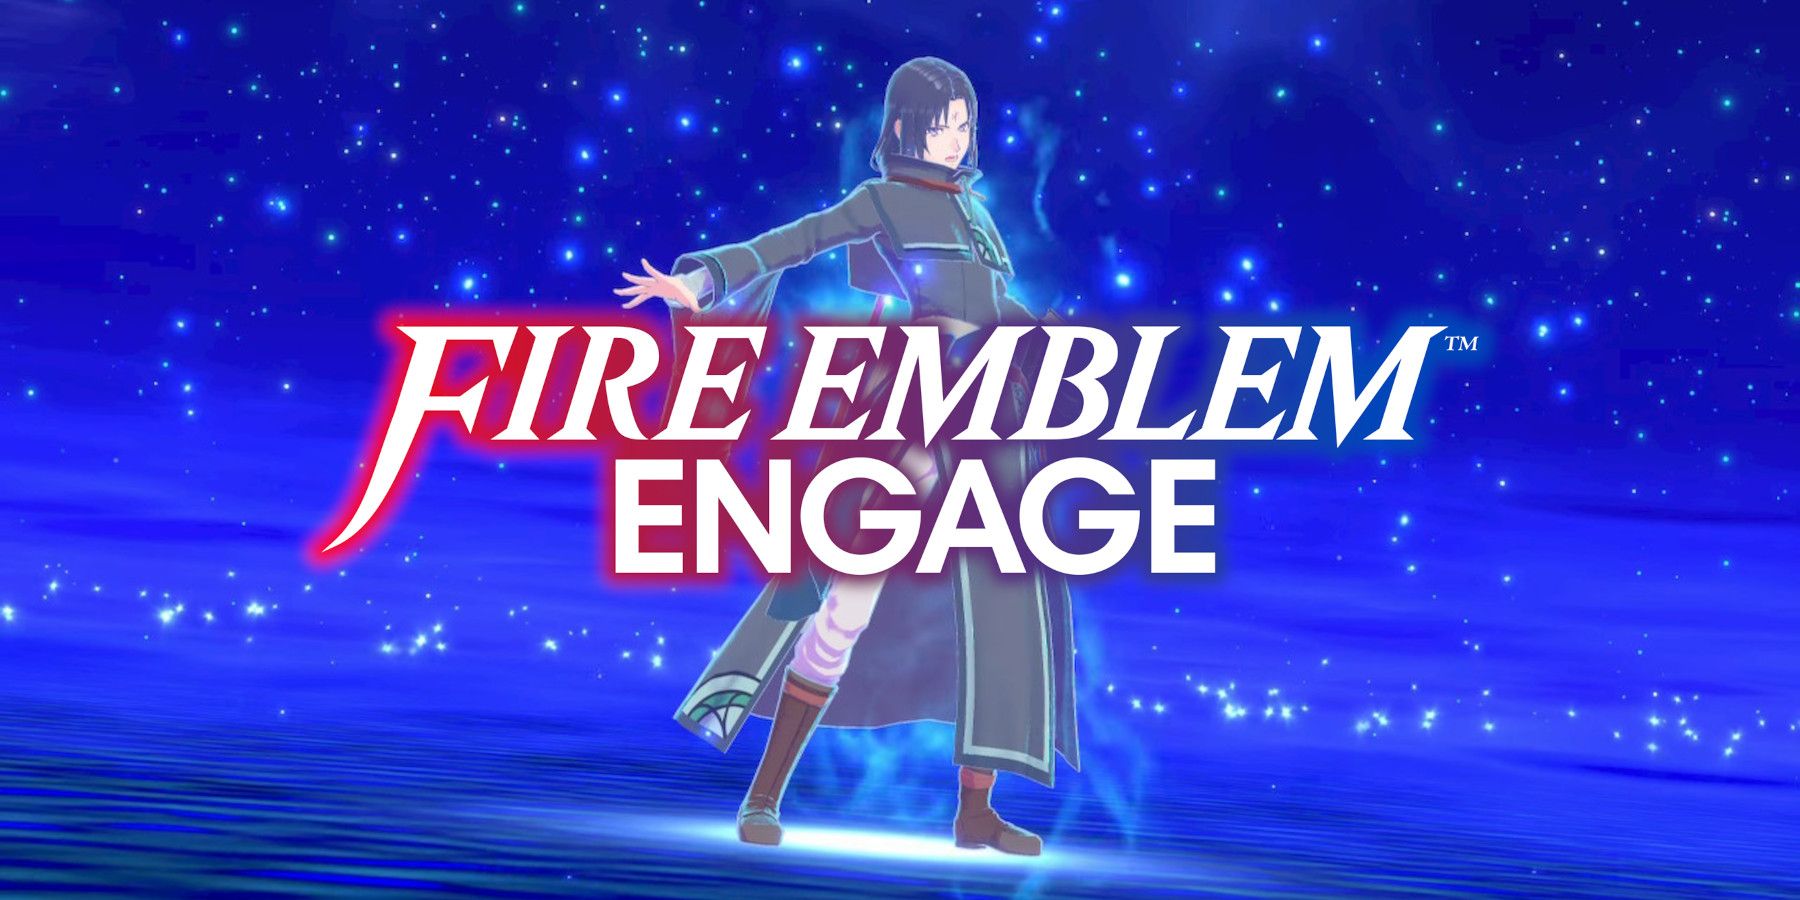 Fire-Emblem-Engage-Soren-DLC-001